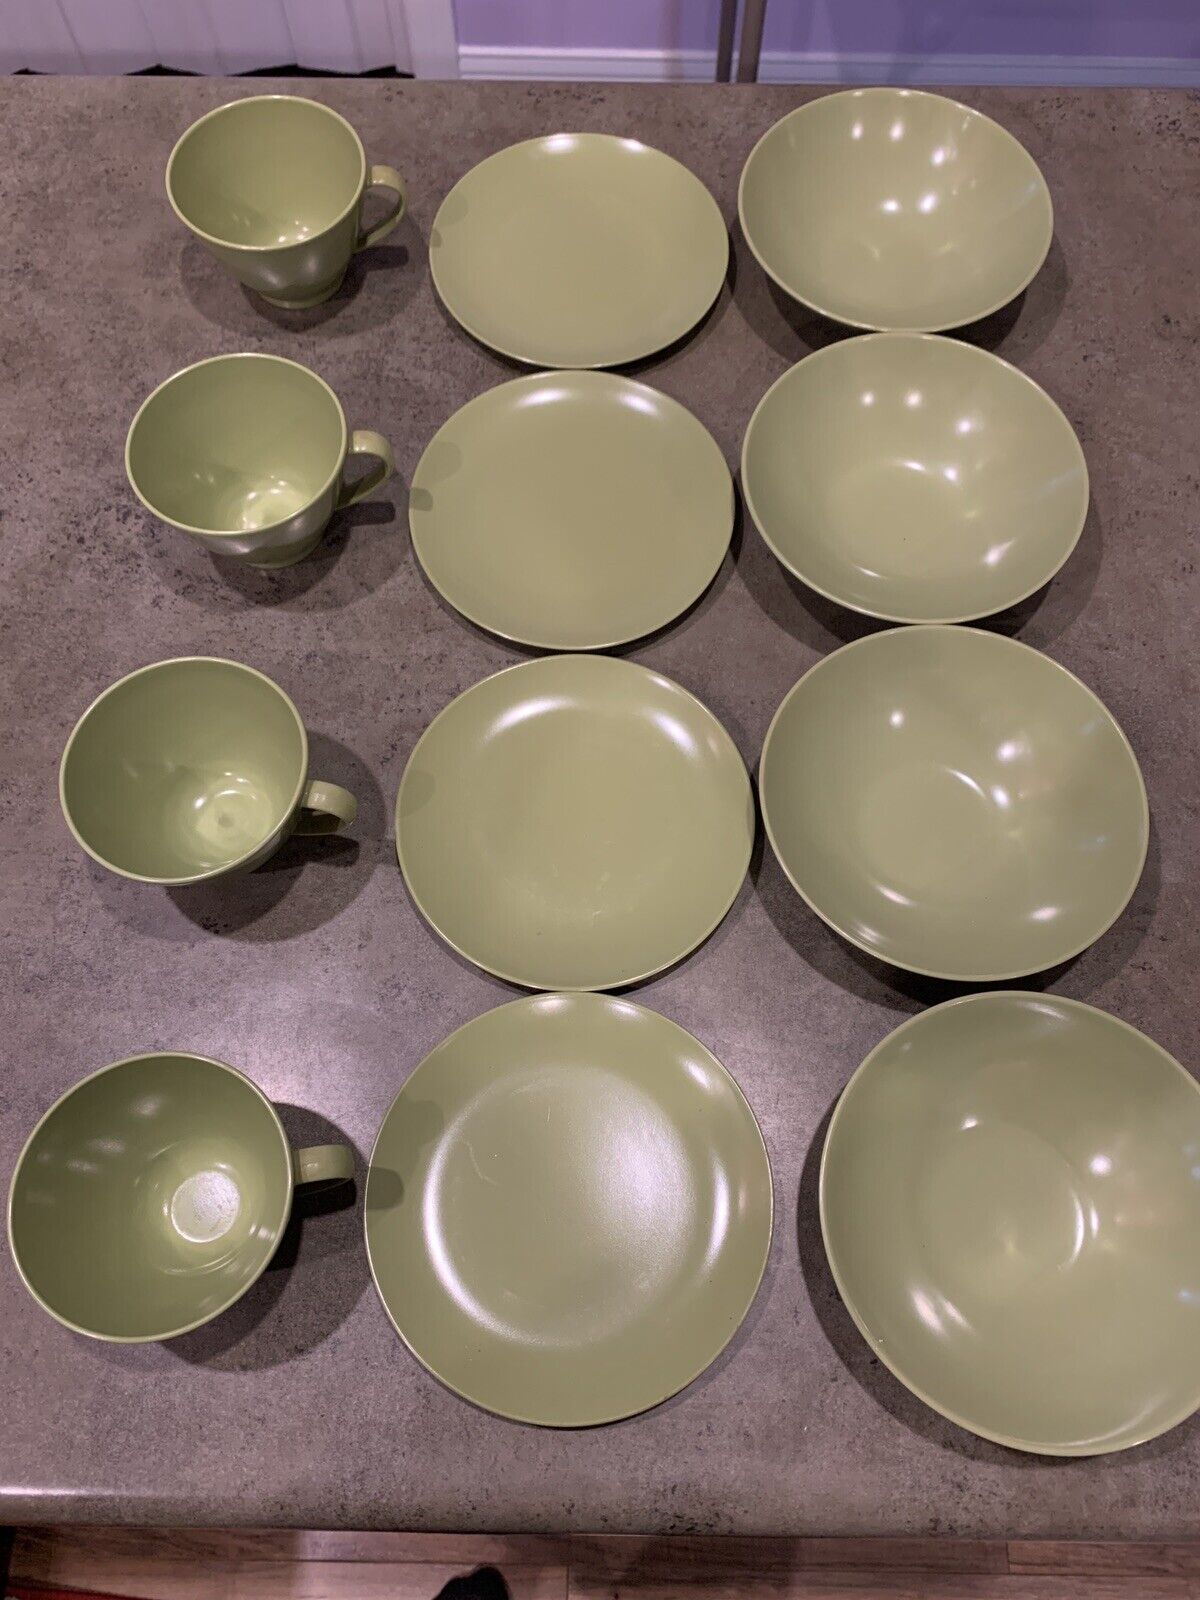 Vintage Lenotex Ware Melamine Melmac Dishes Bowls Tea Cups Set Of 12 Green